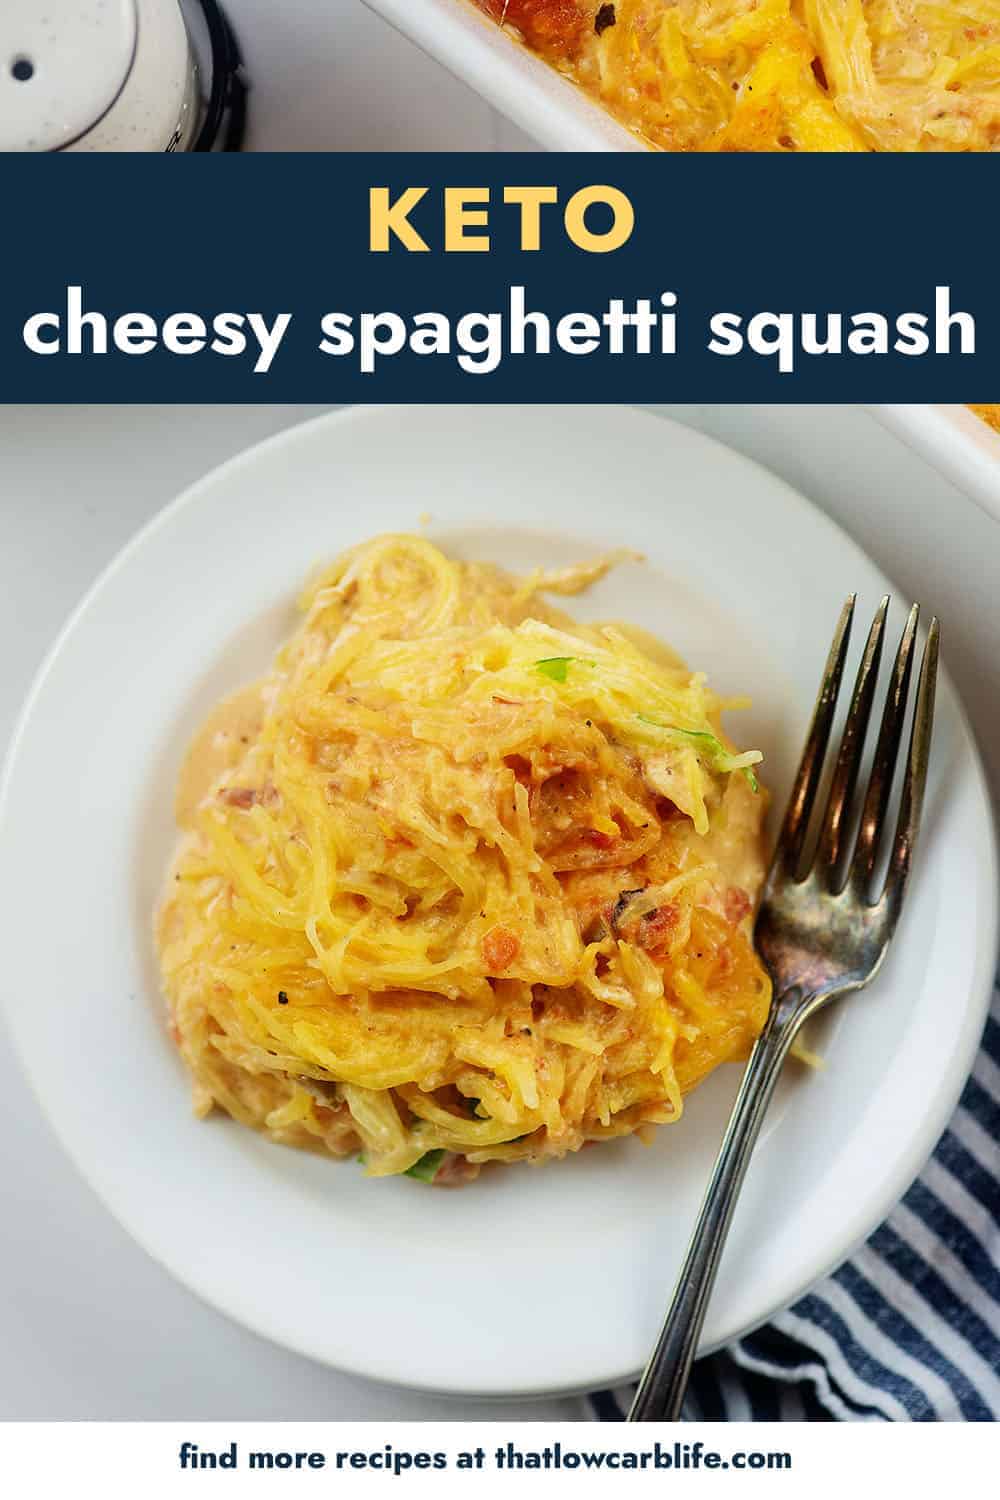 Chicken Spaghetti Squash Casserole - That Low Carb Life